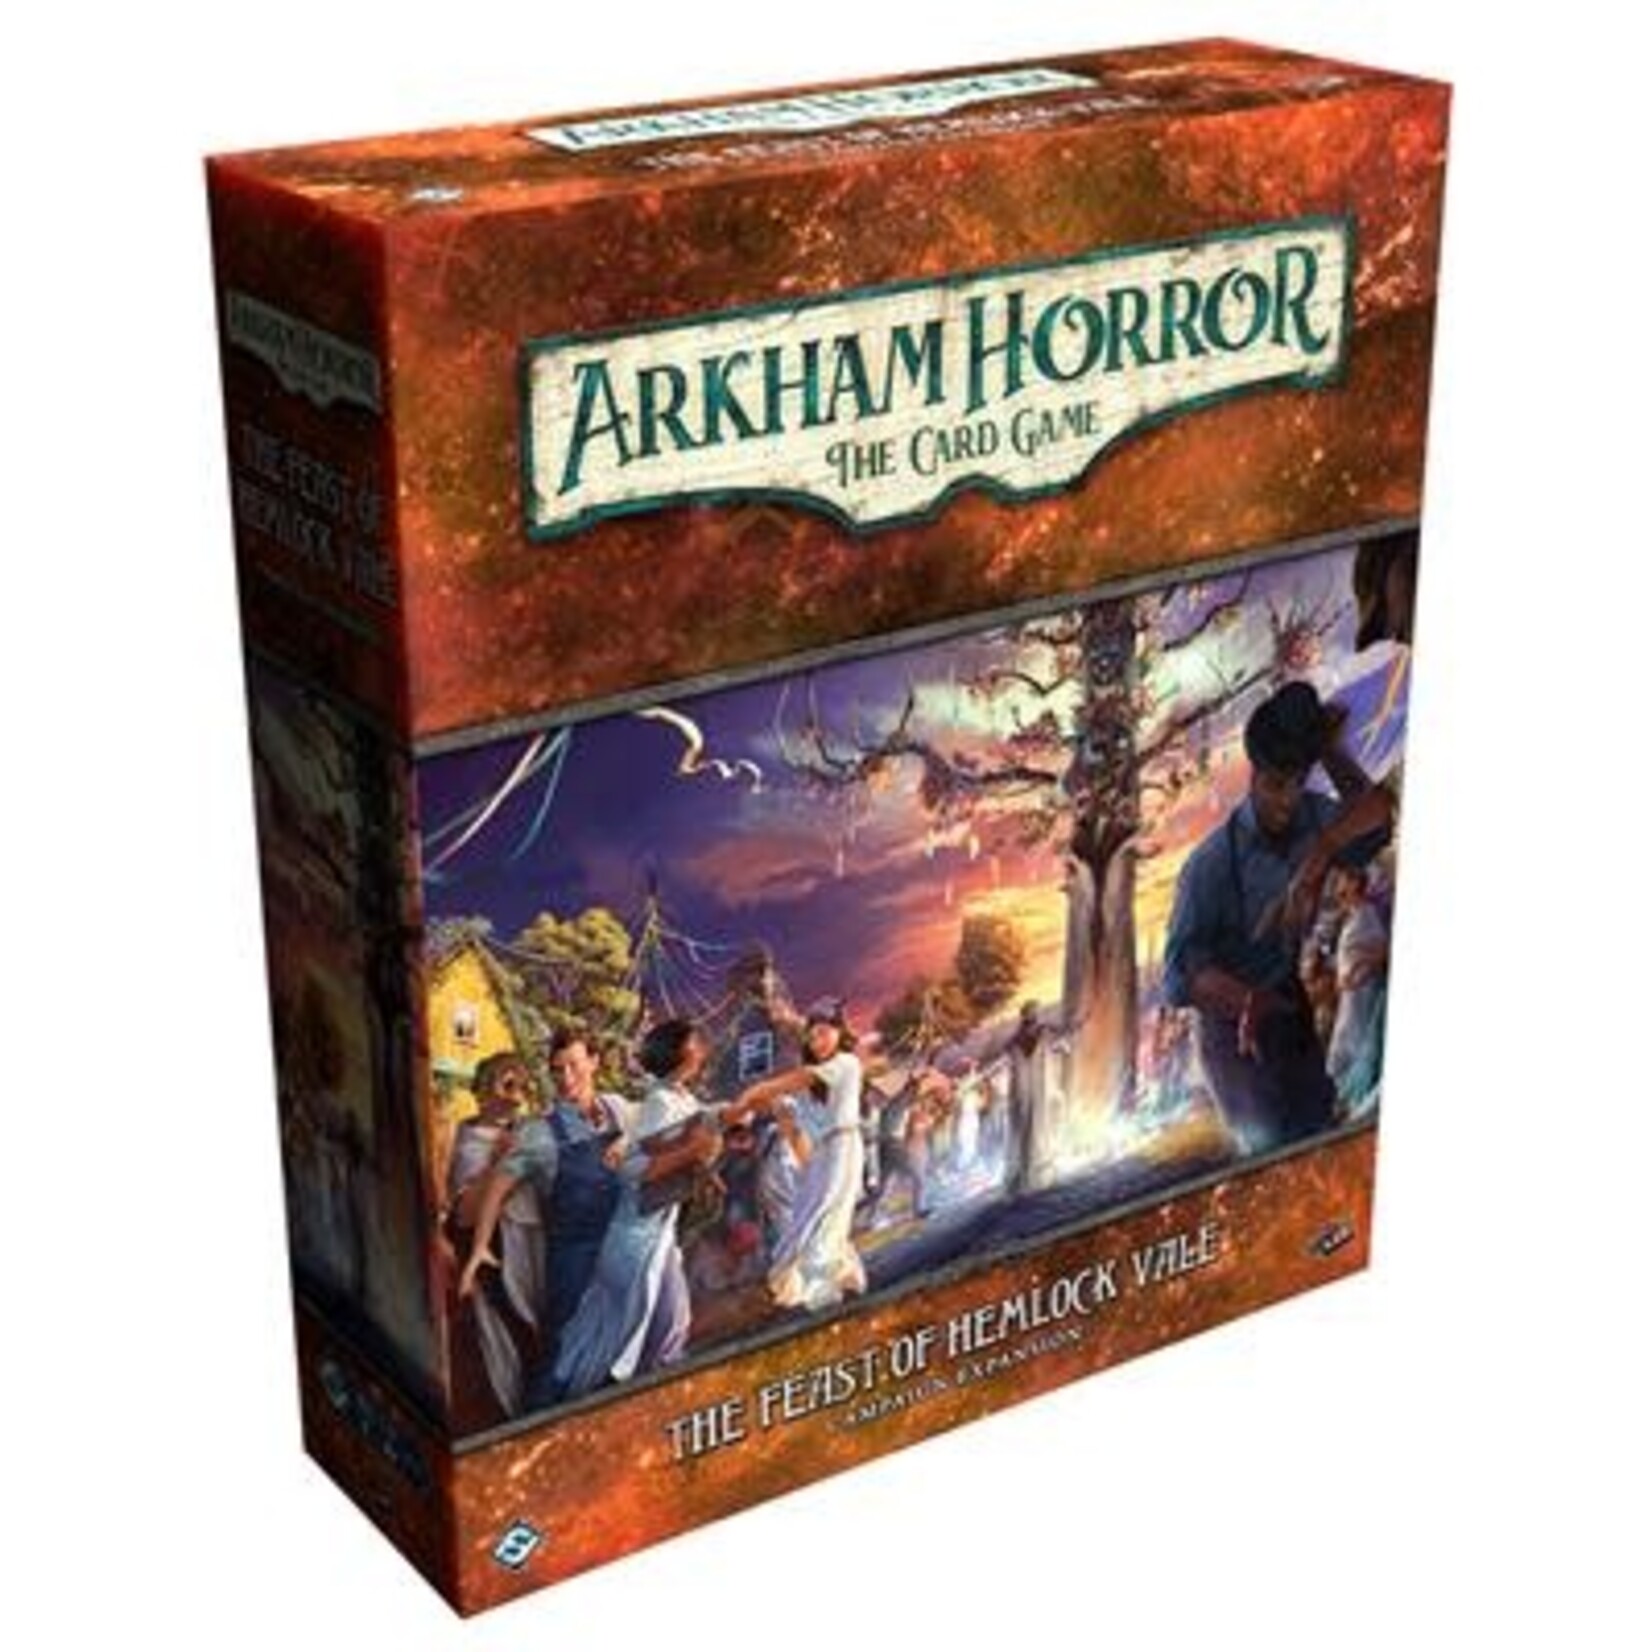 Fantasy Flight Games Arkham Horror LCG: The Feast of Hemlock Vale (Campaign Expansion)